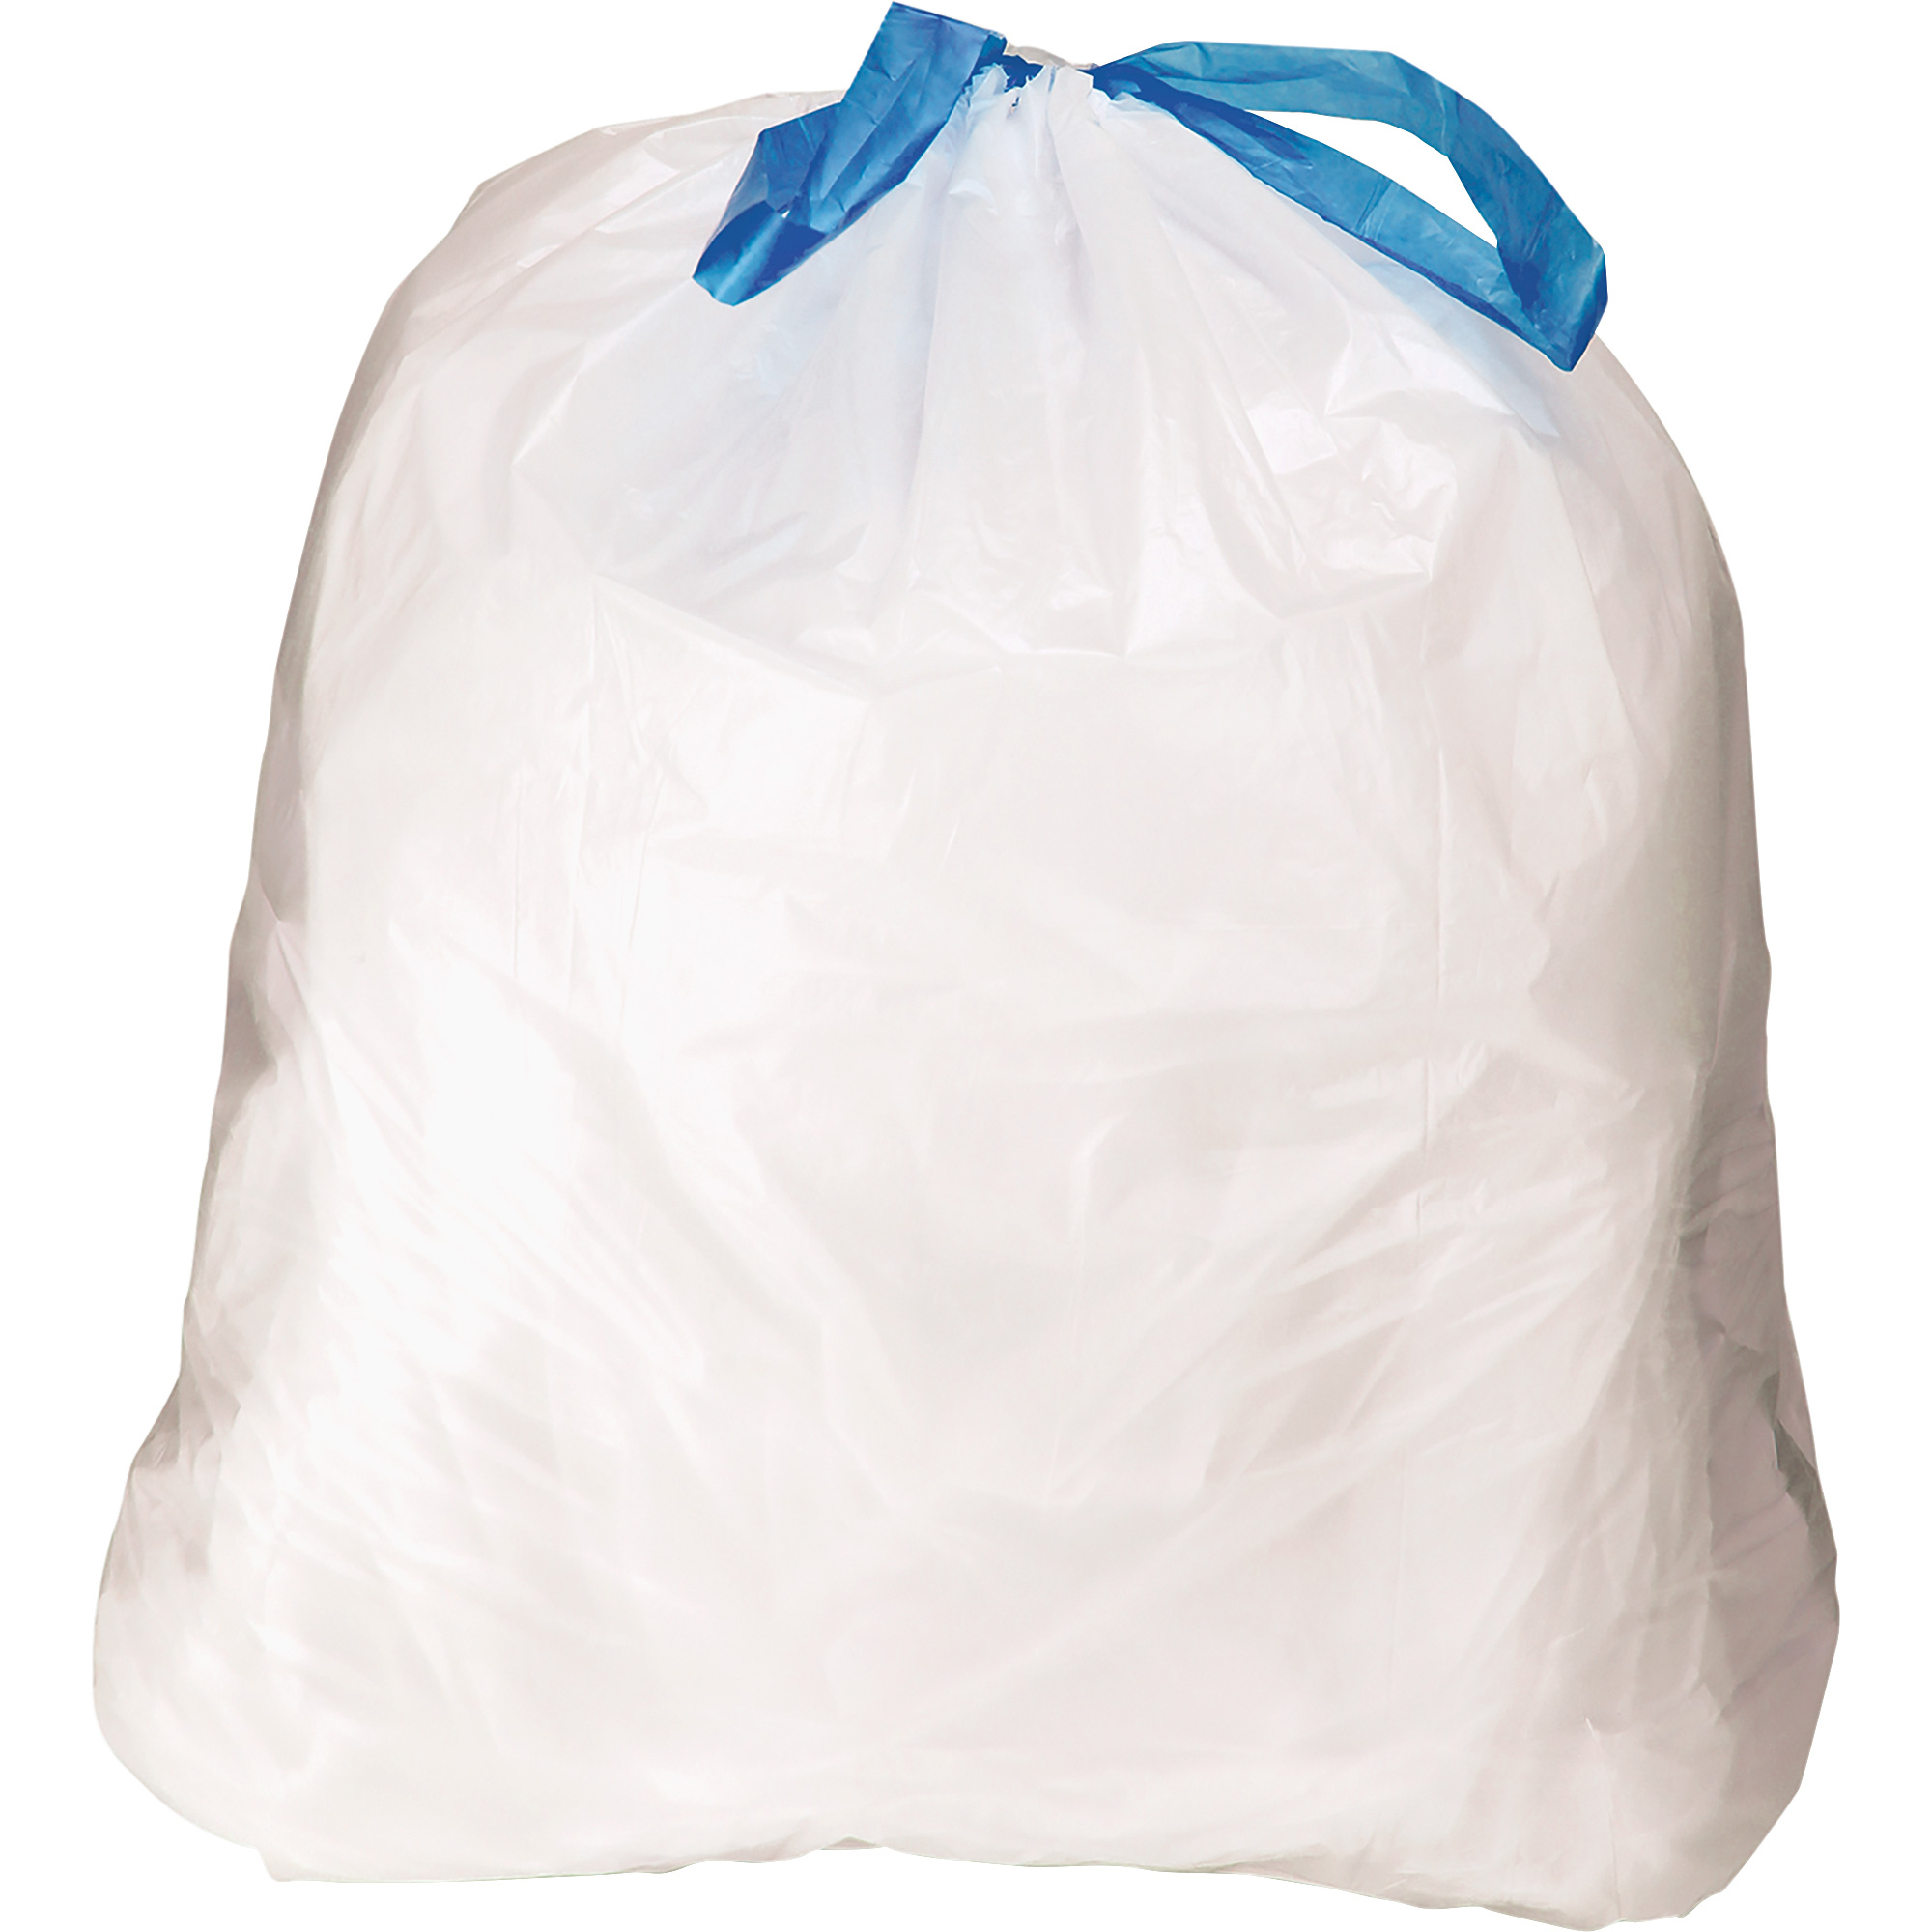 Hefty CinchSak 13-gallon Drawstring Bags - 13 gal Capacity